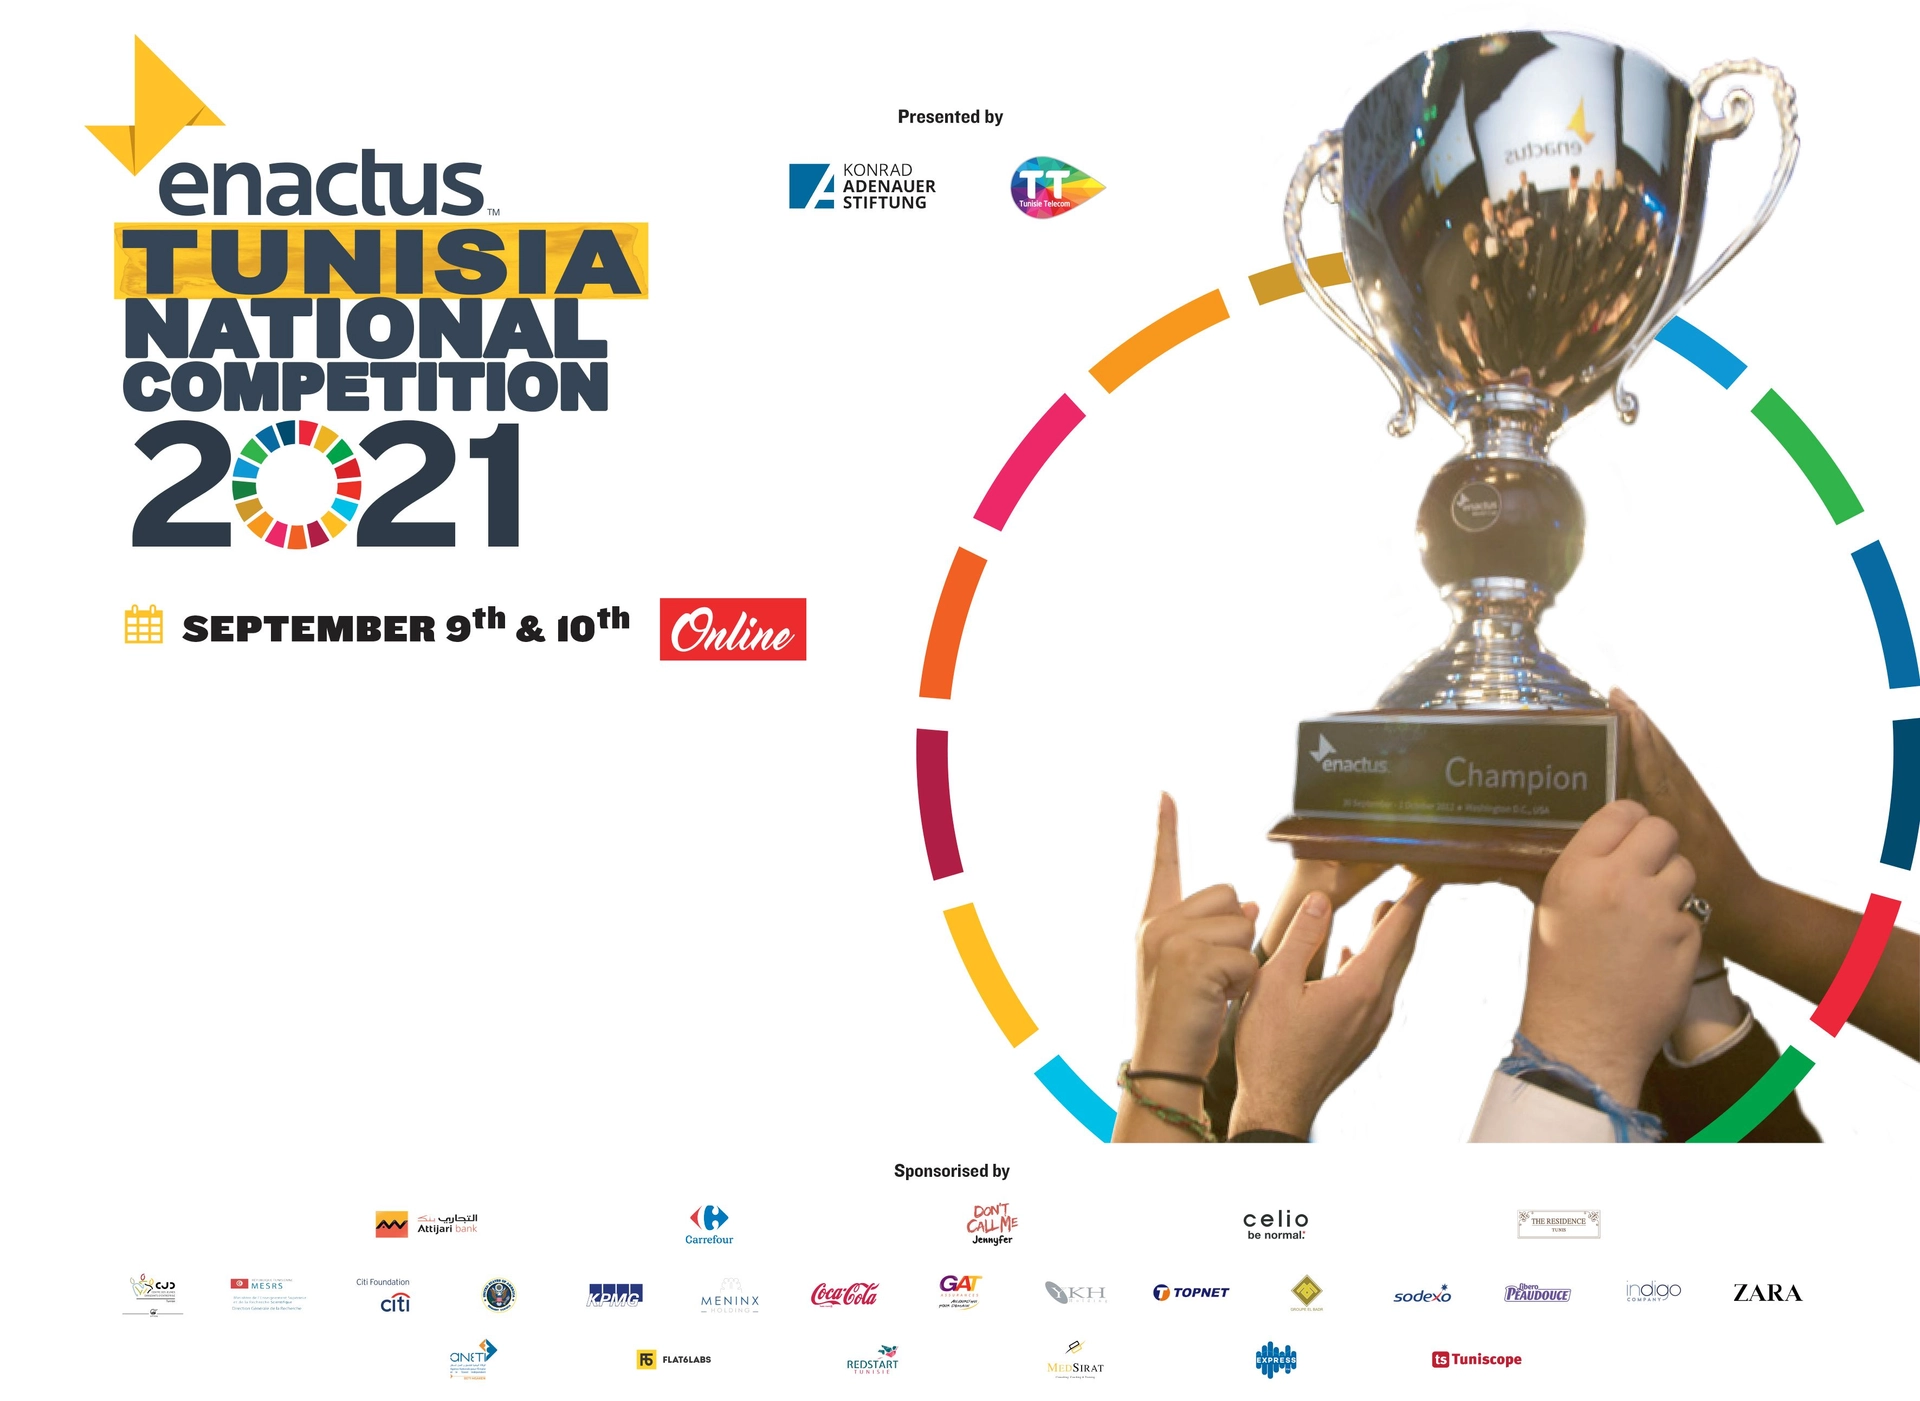 Enactus Tunisia National Competition 2021